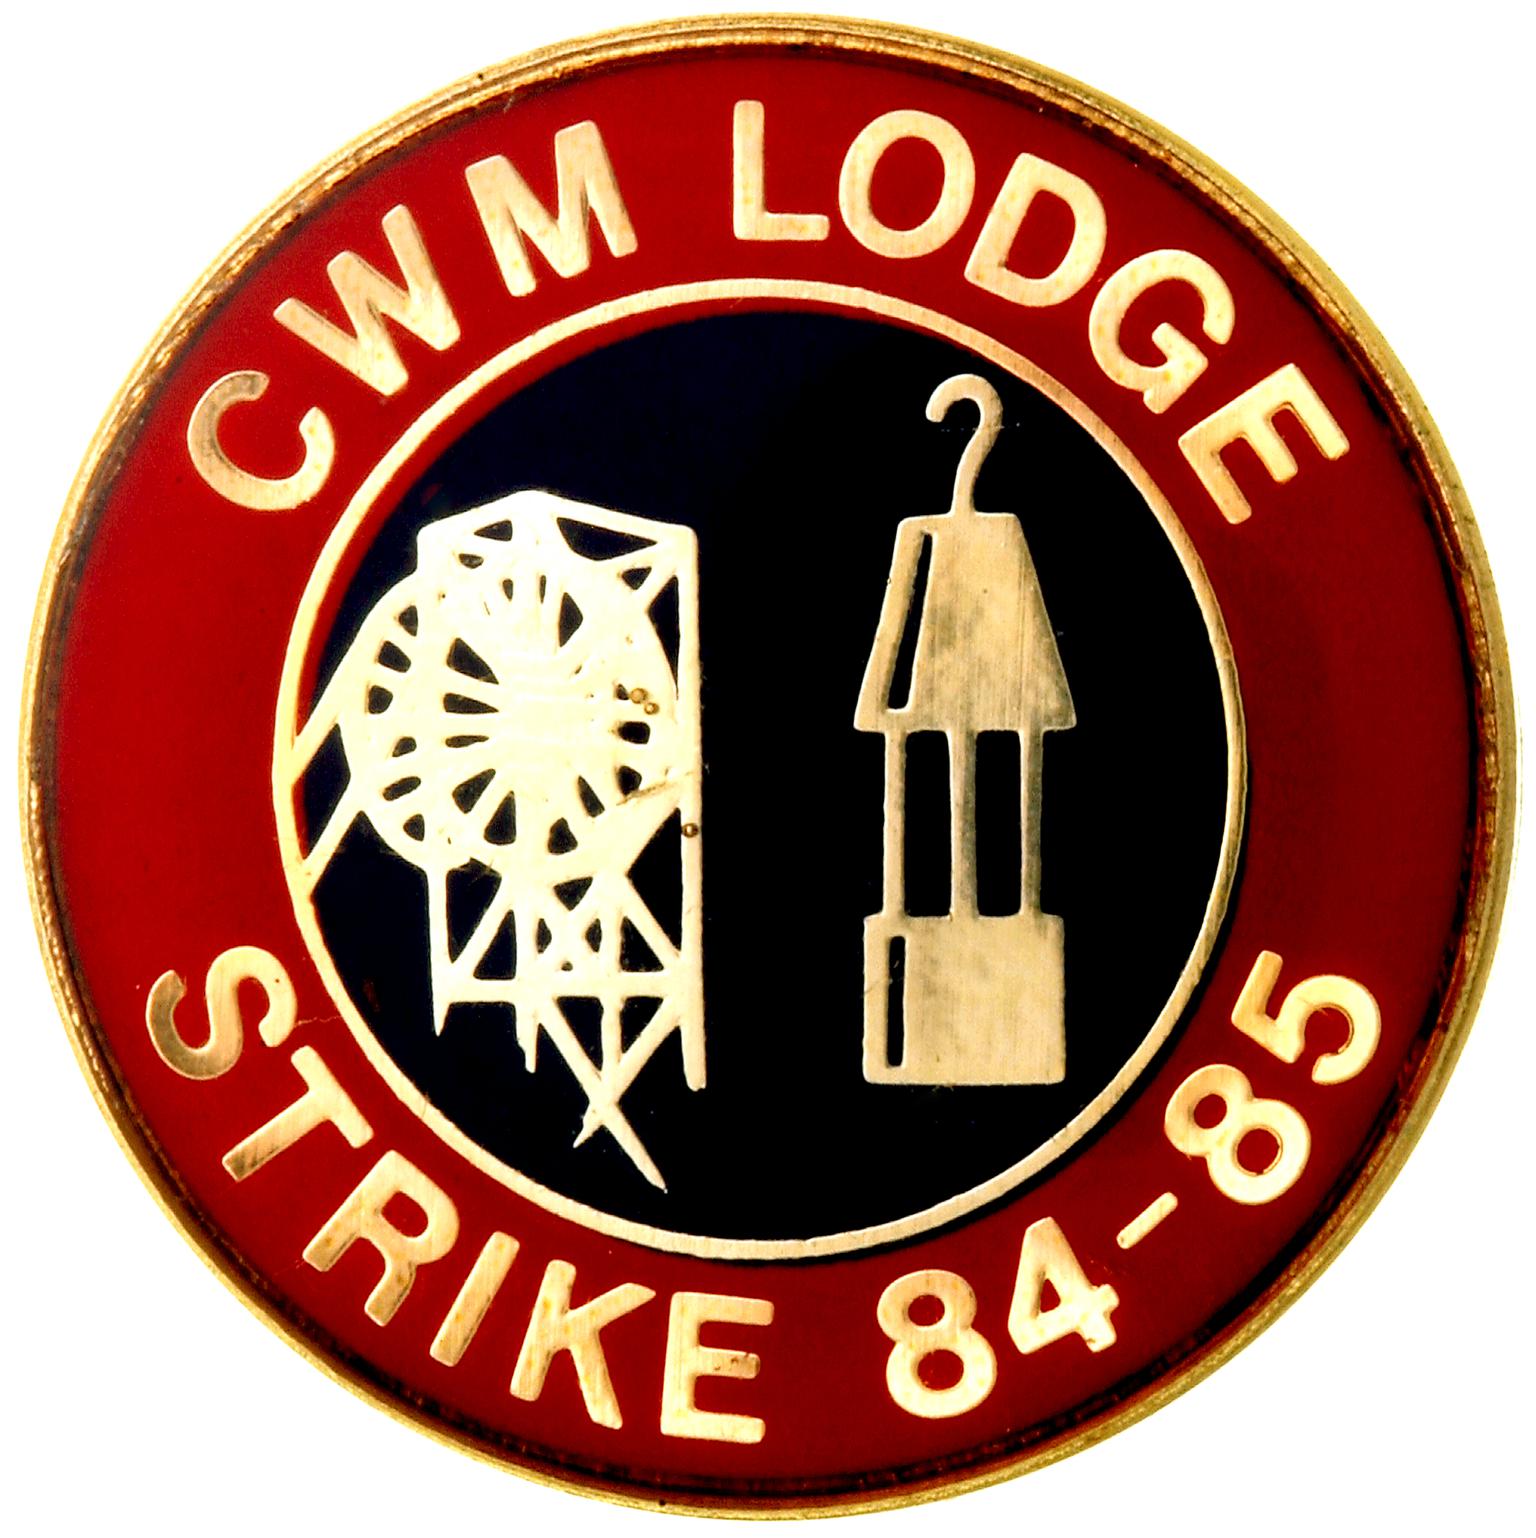 Cwm Lodge Strike 84-85, badge